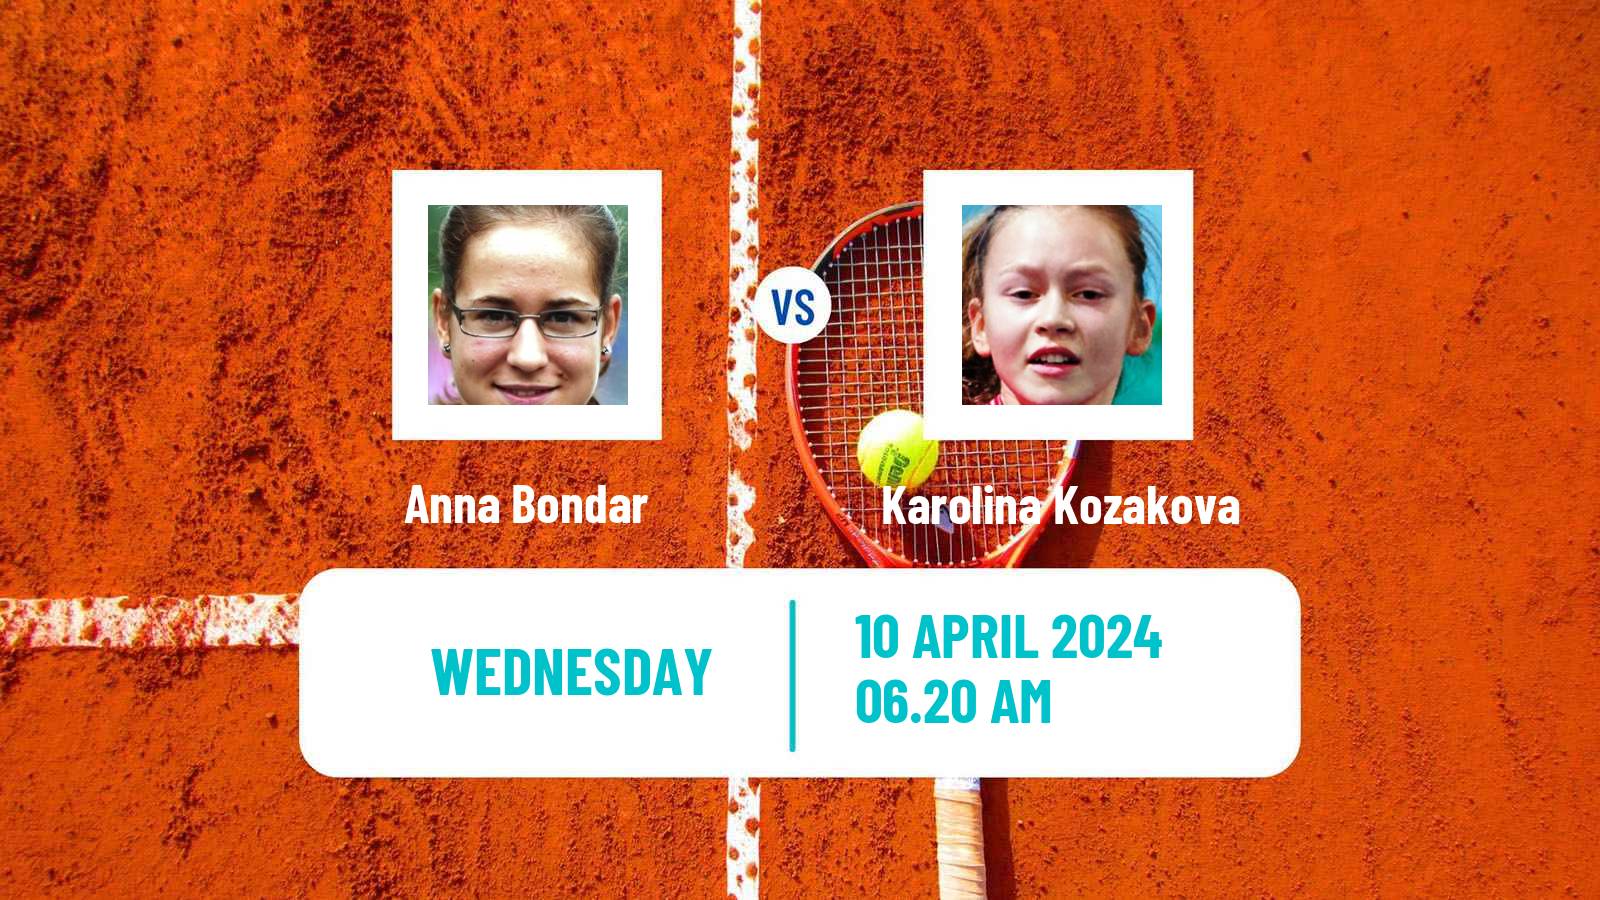 Tennis ITF W75 Bellinzona Women Anna Bondar - Karolina Kozakova